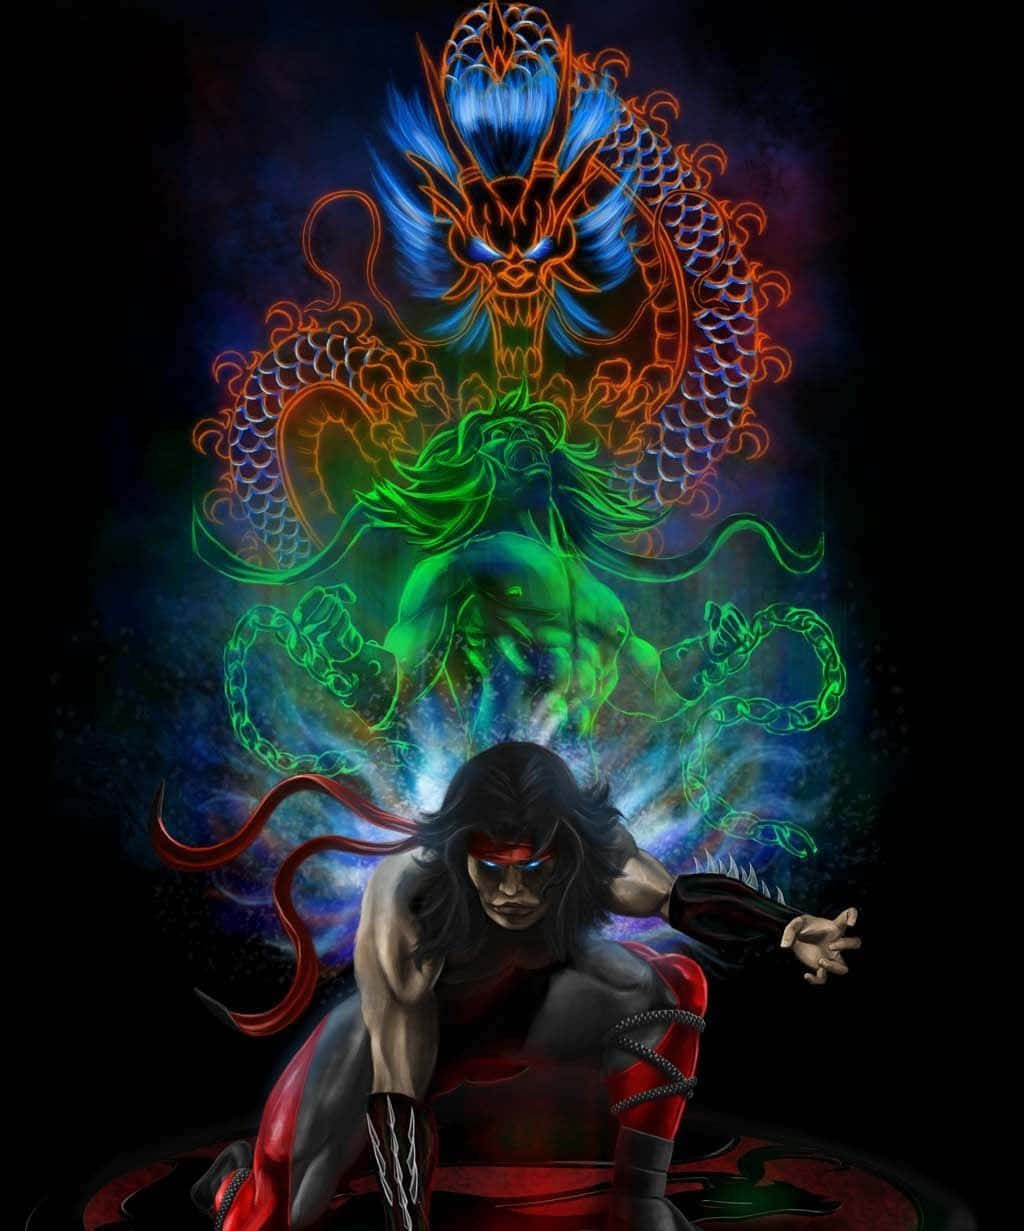 Liu Kang performing a flying kick in Mortal Kombat Wallpaper